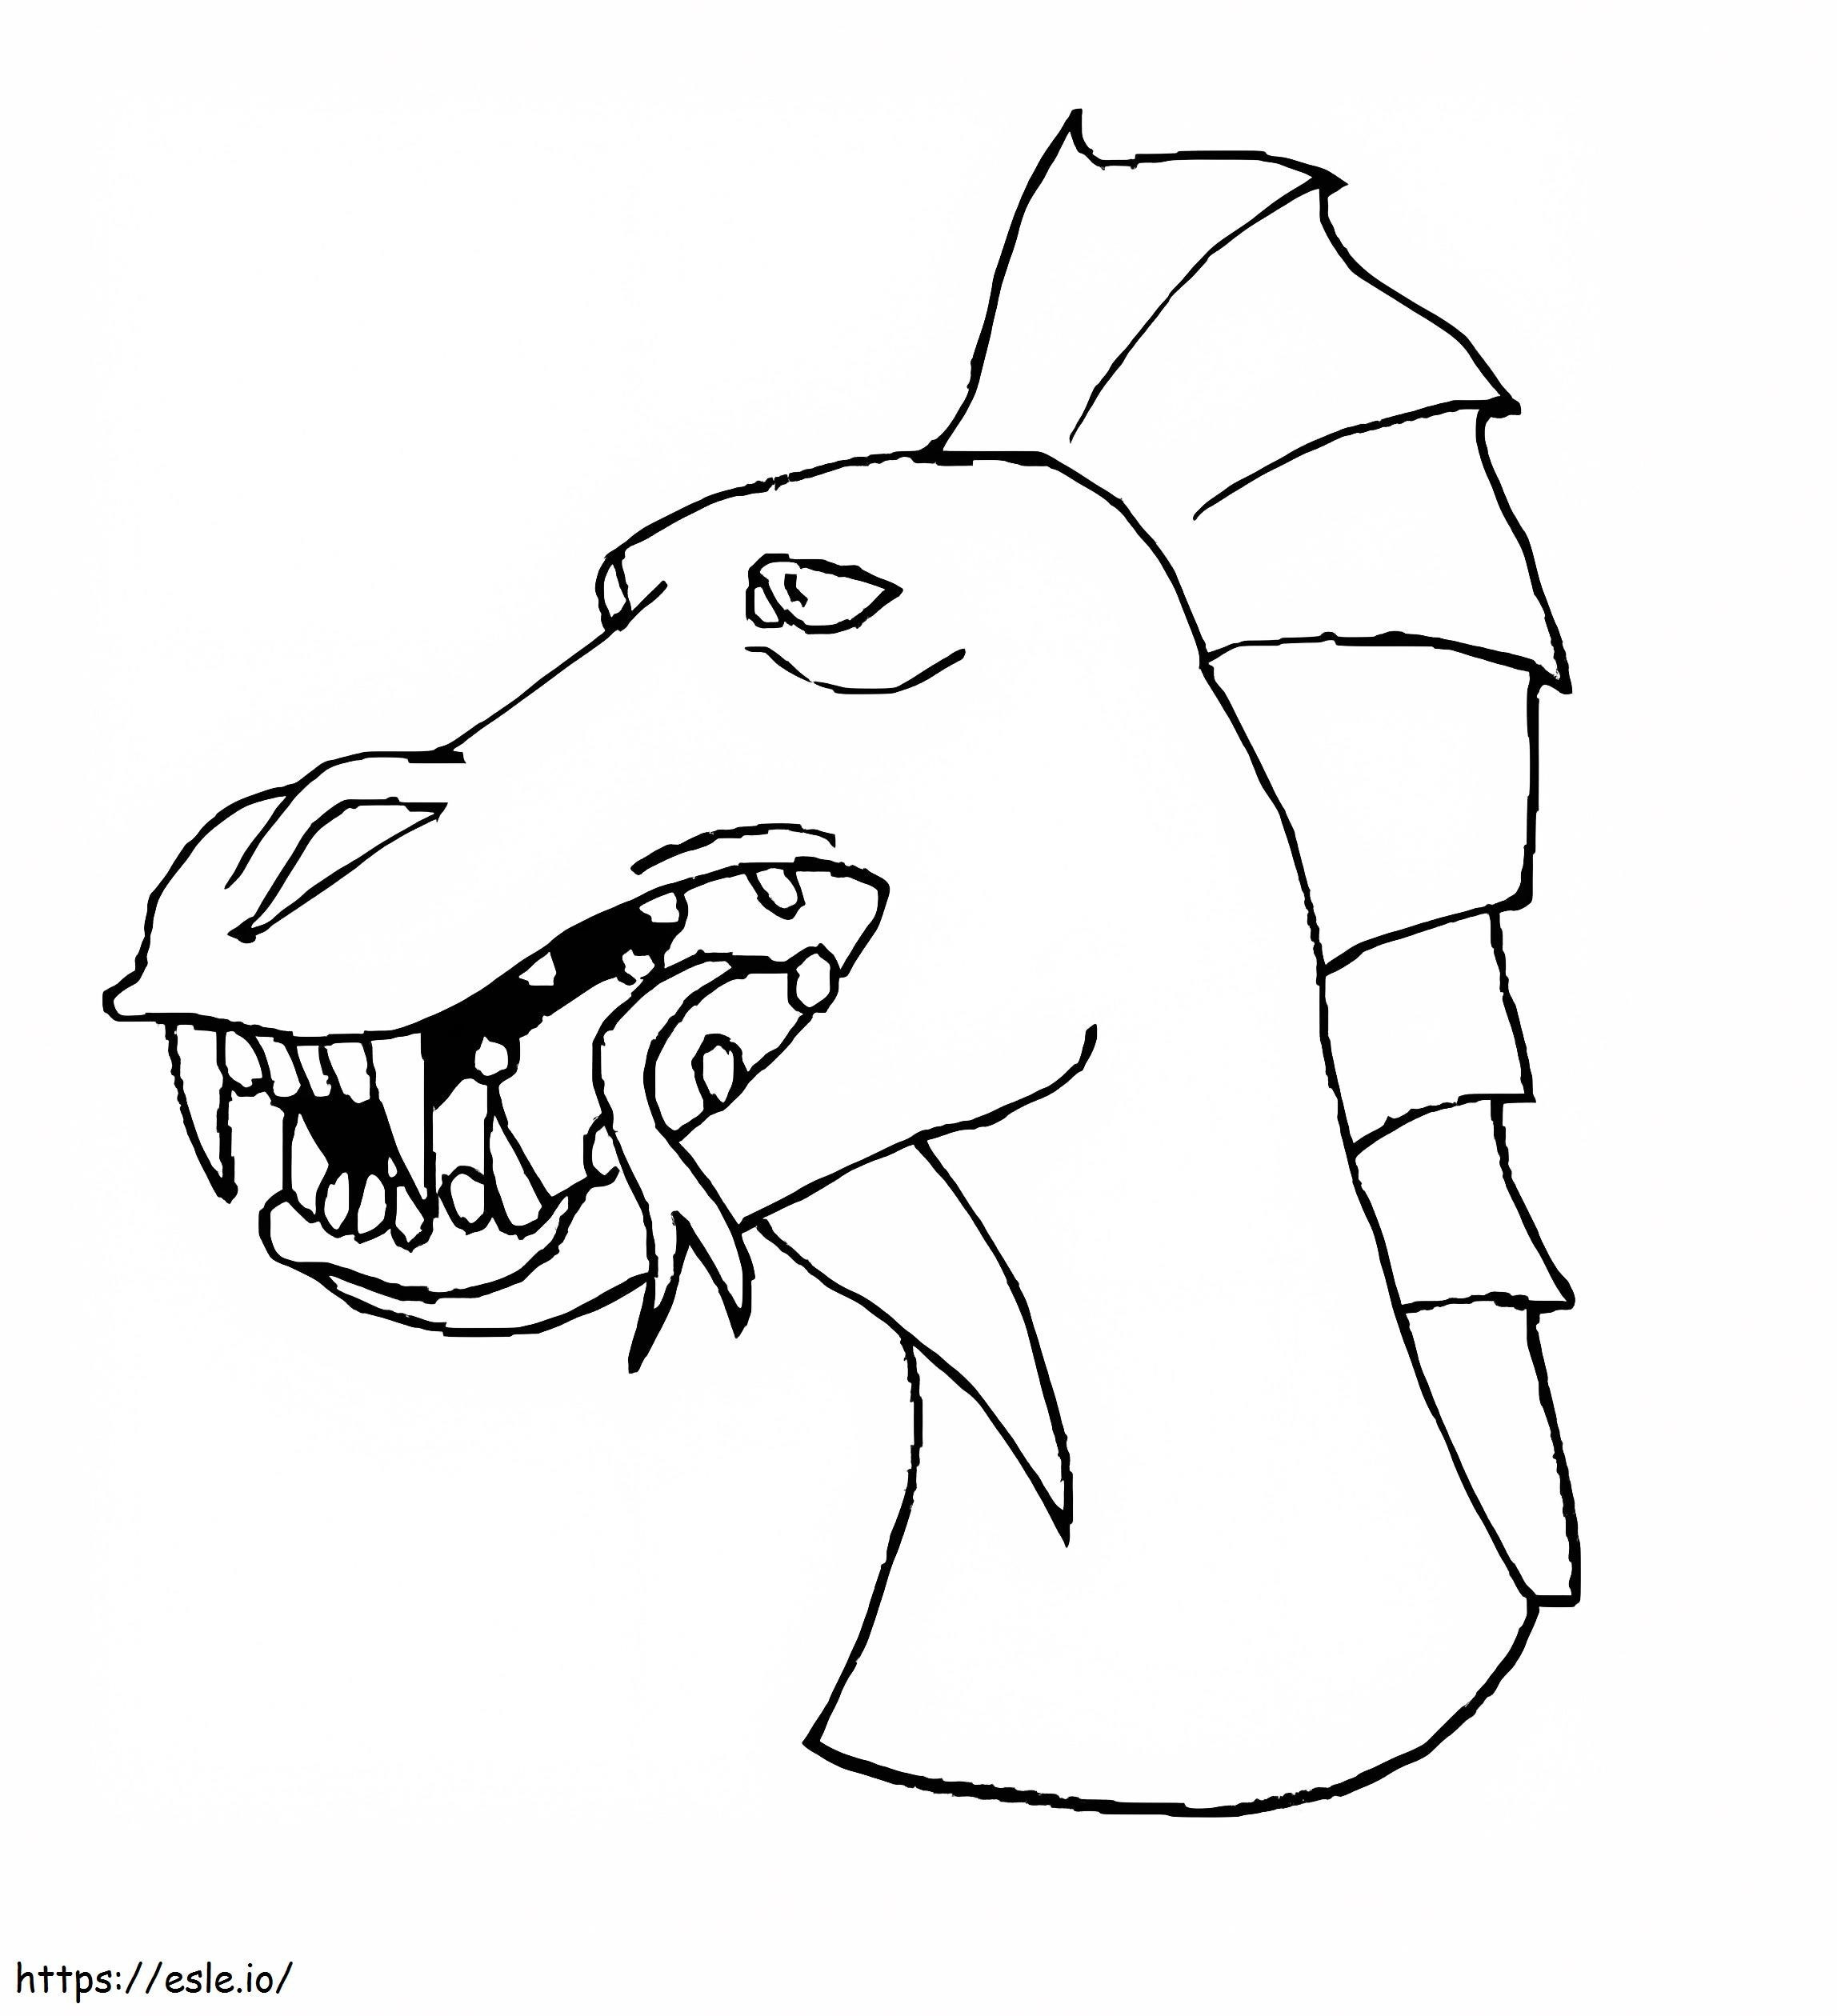 Funny Dragon Head coloring page